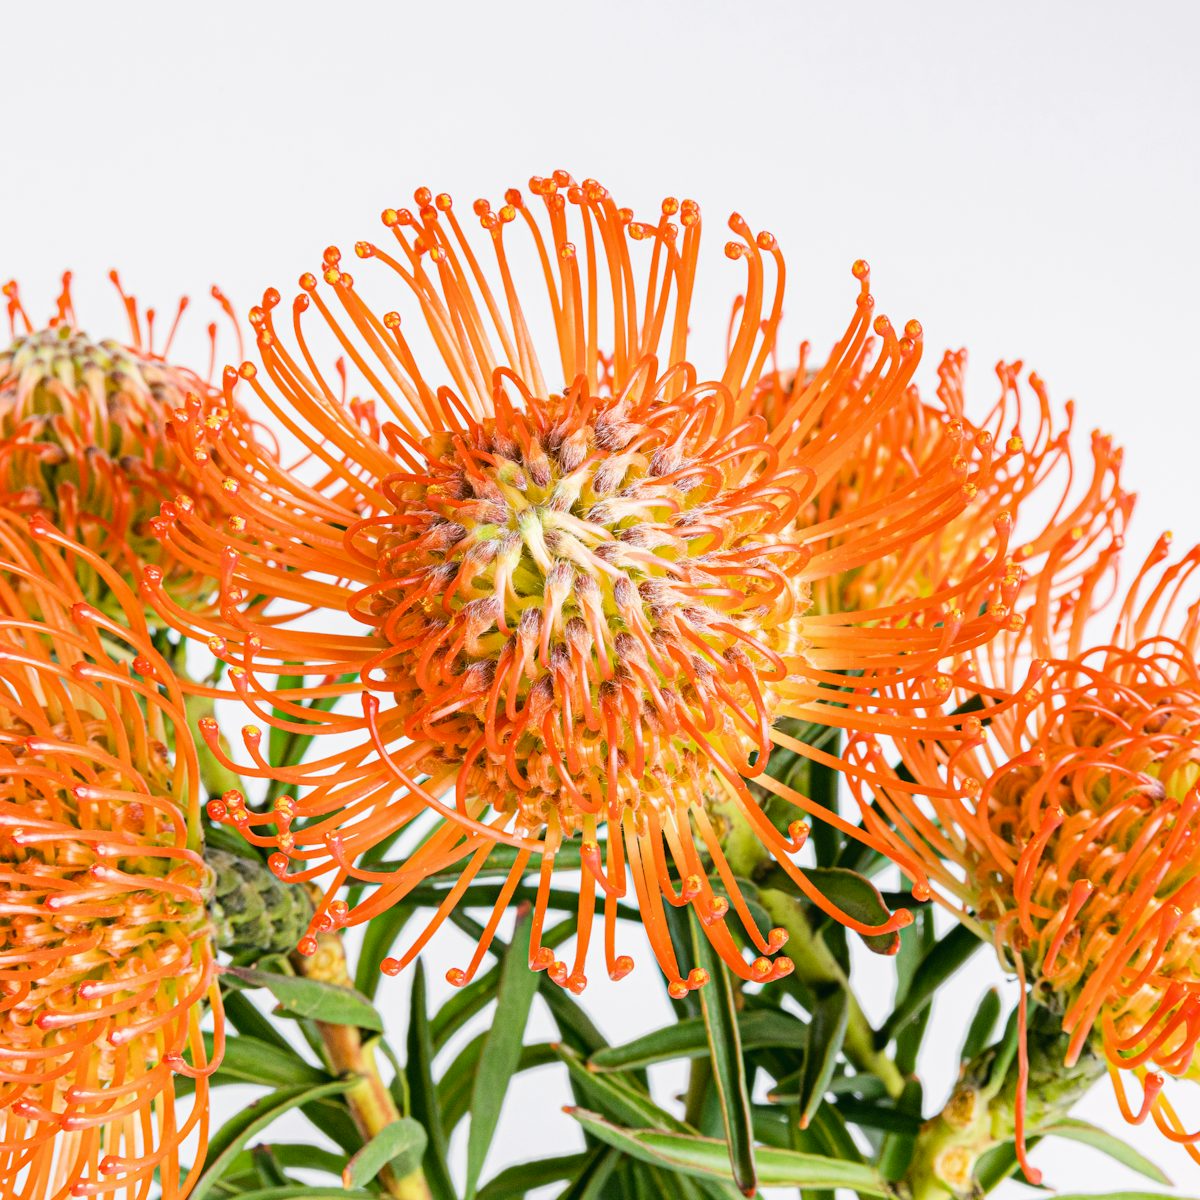 Protea-Sträußchen